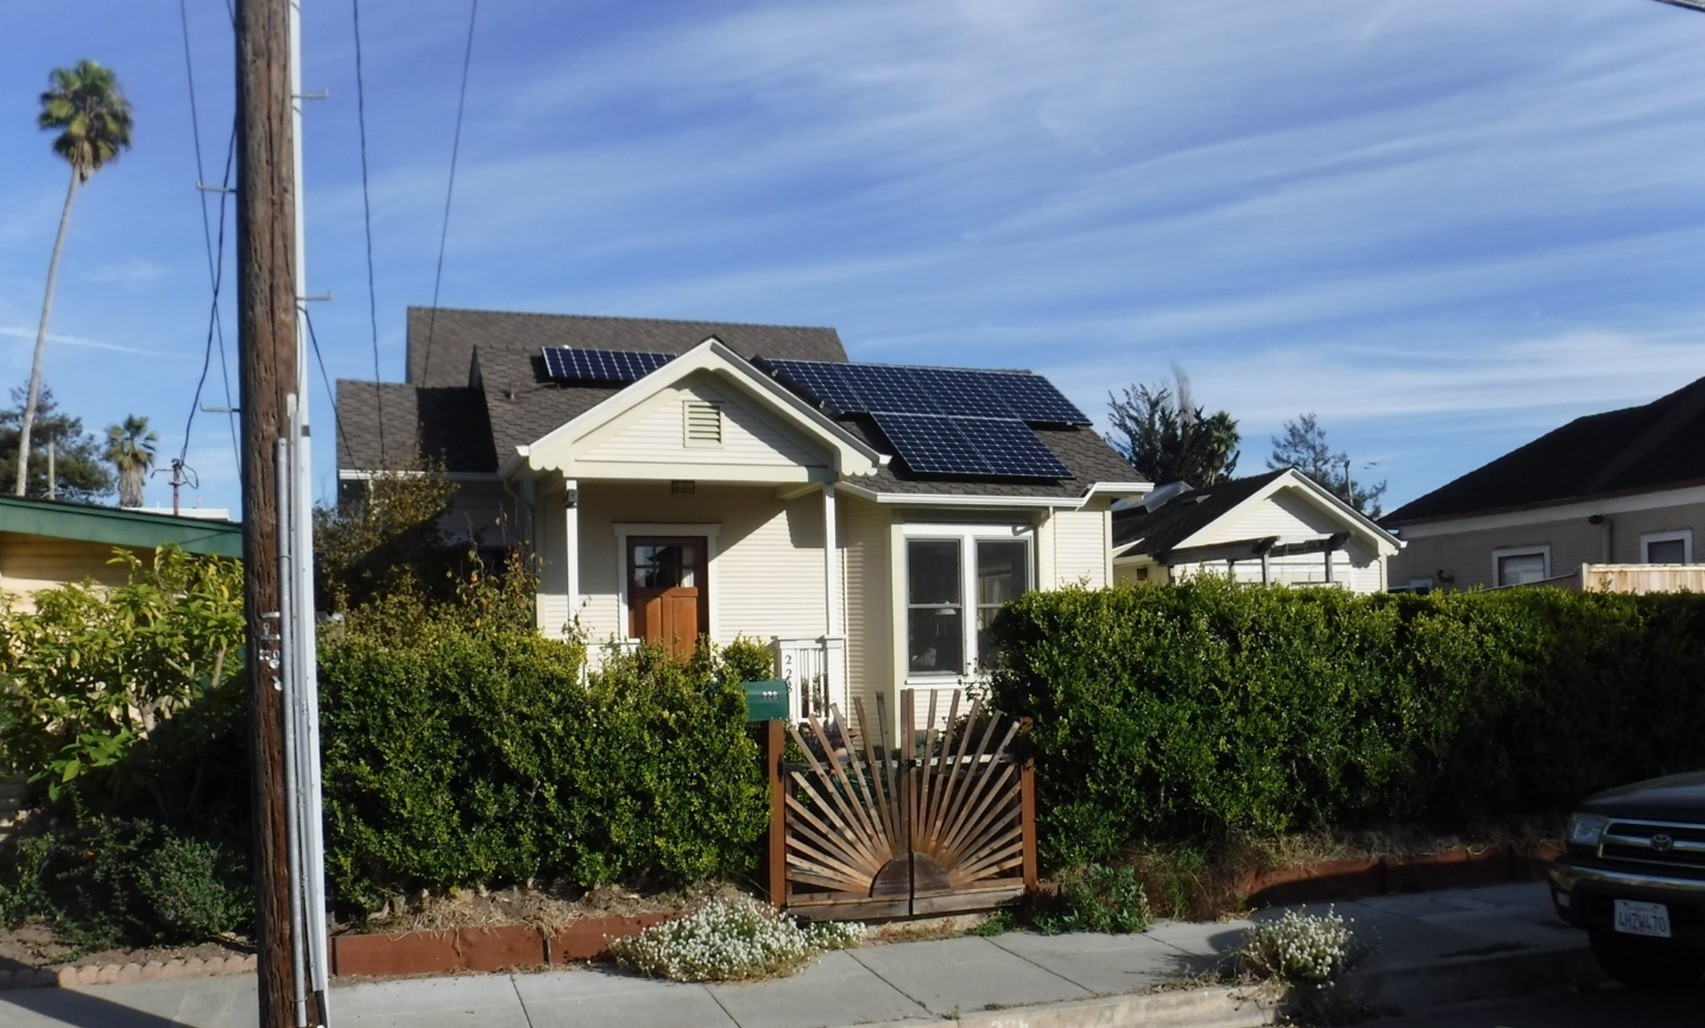 solar tax credit 2021